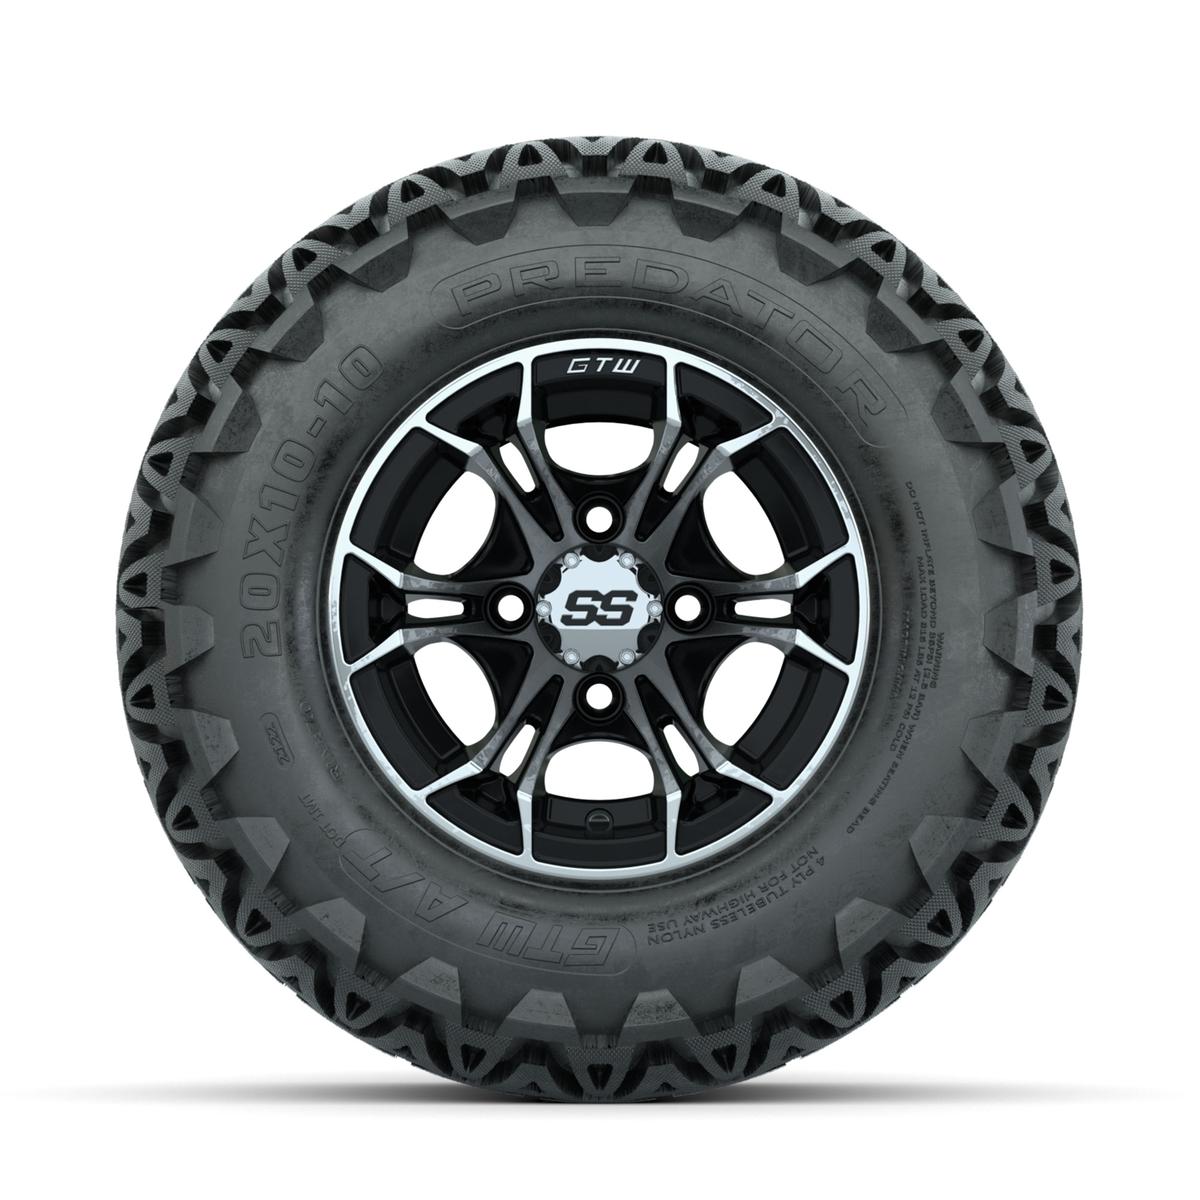 GTW Spyder Machined/Black 10 in Wheels with 20x10-10 Predator All Terrain Tires – Full Set